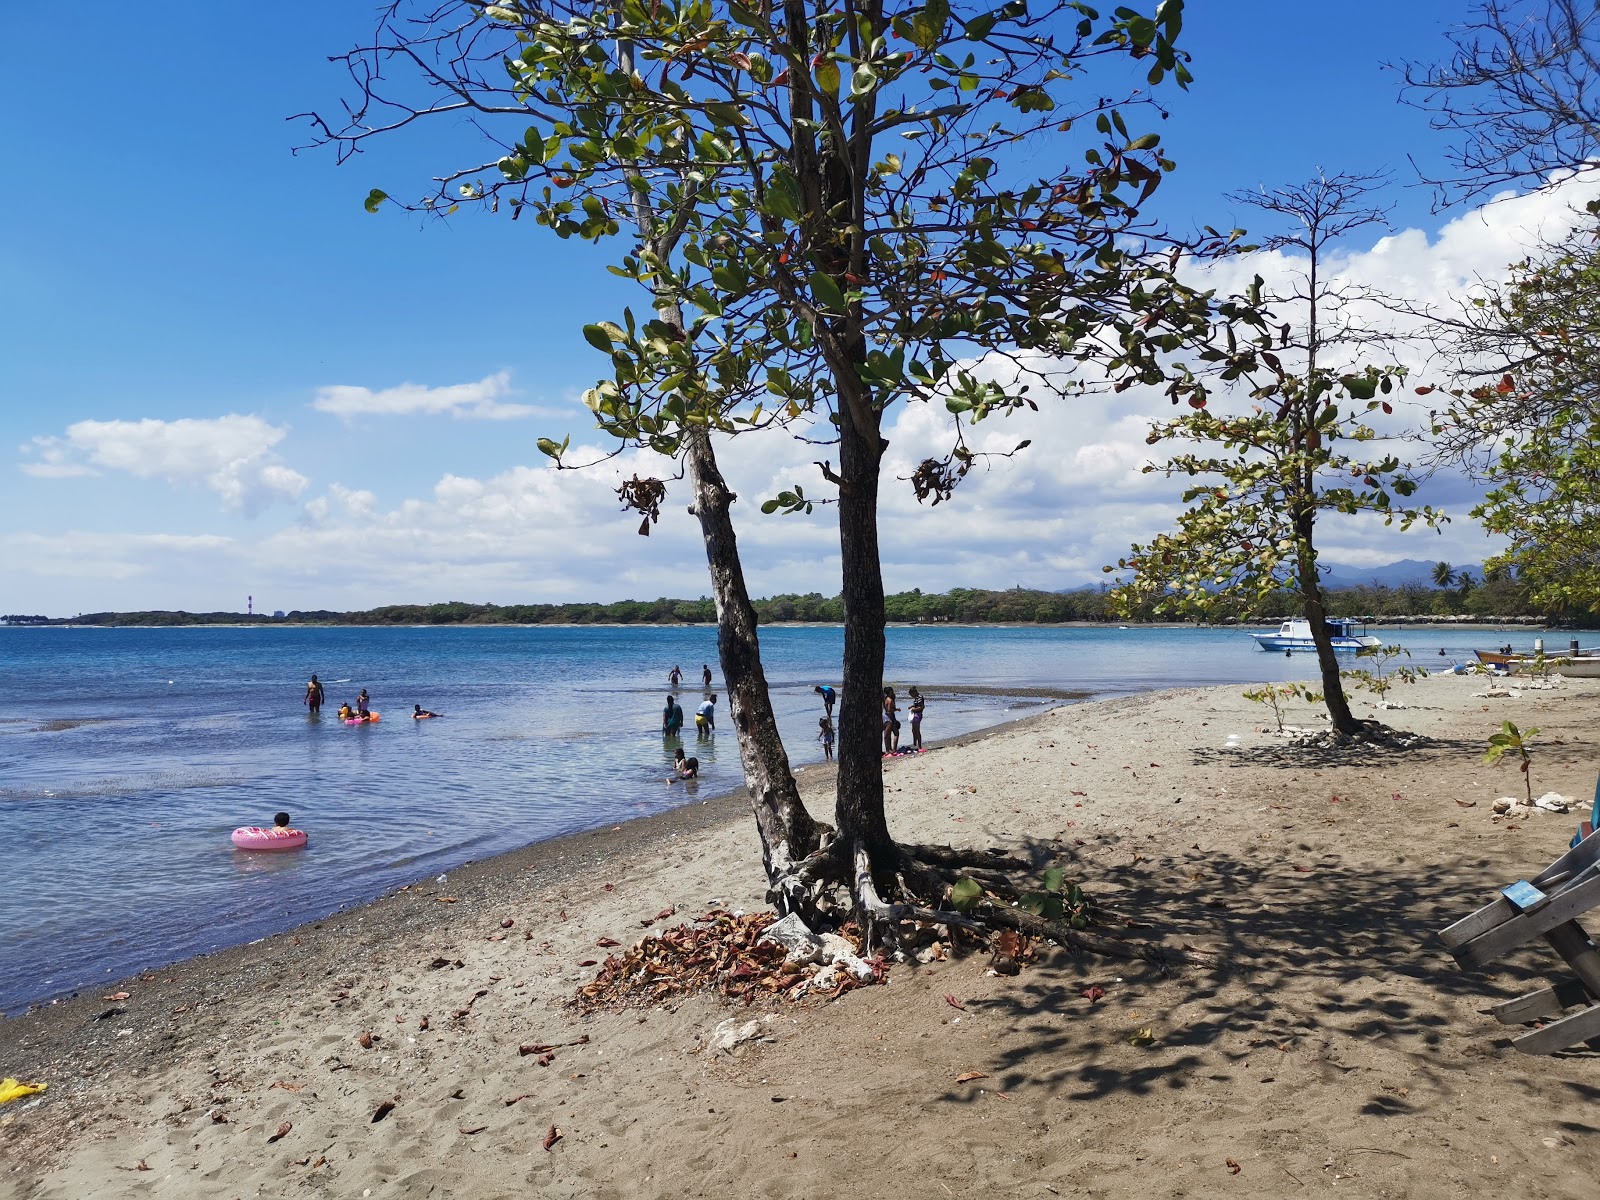 Fotografija Palenque beach z turkizna voda površino